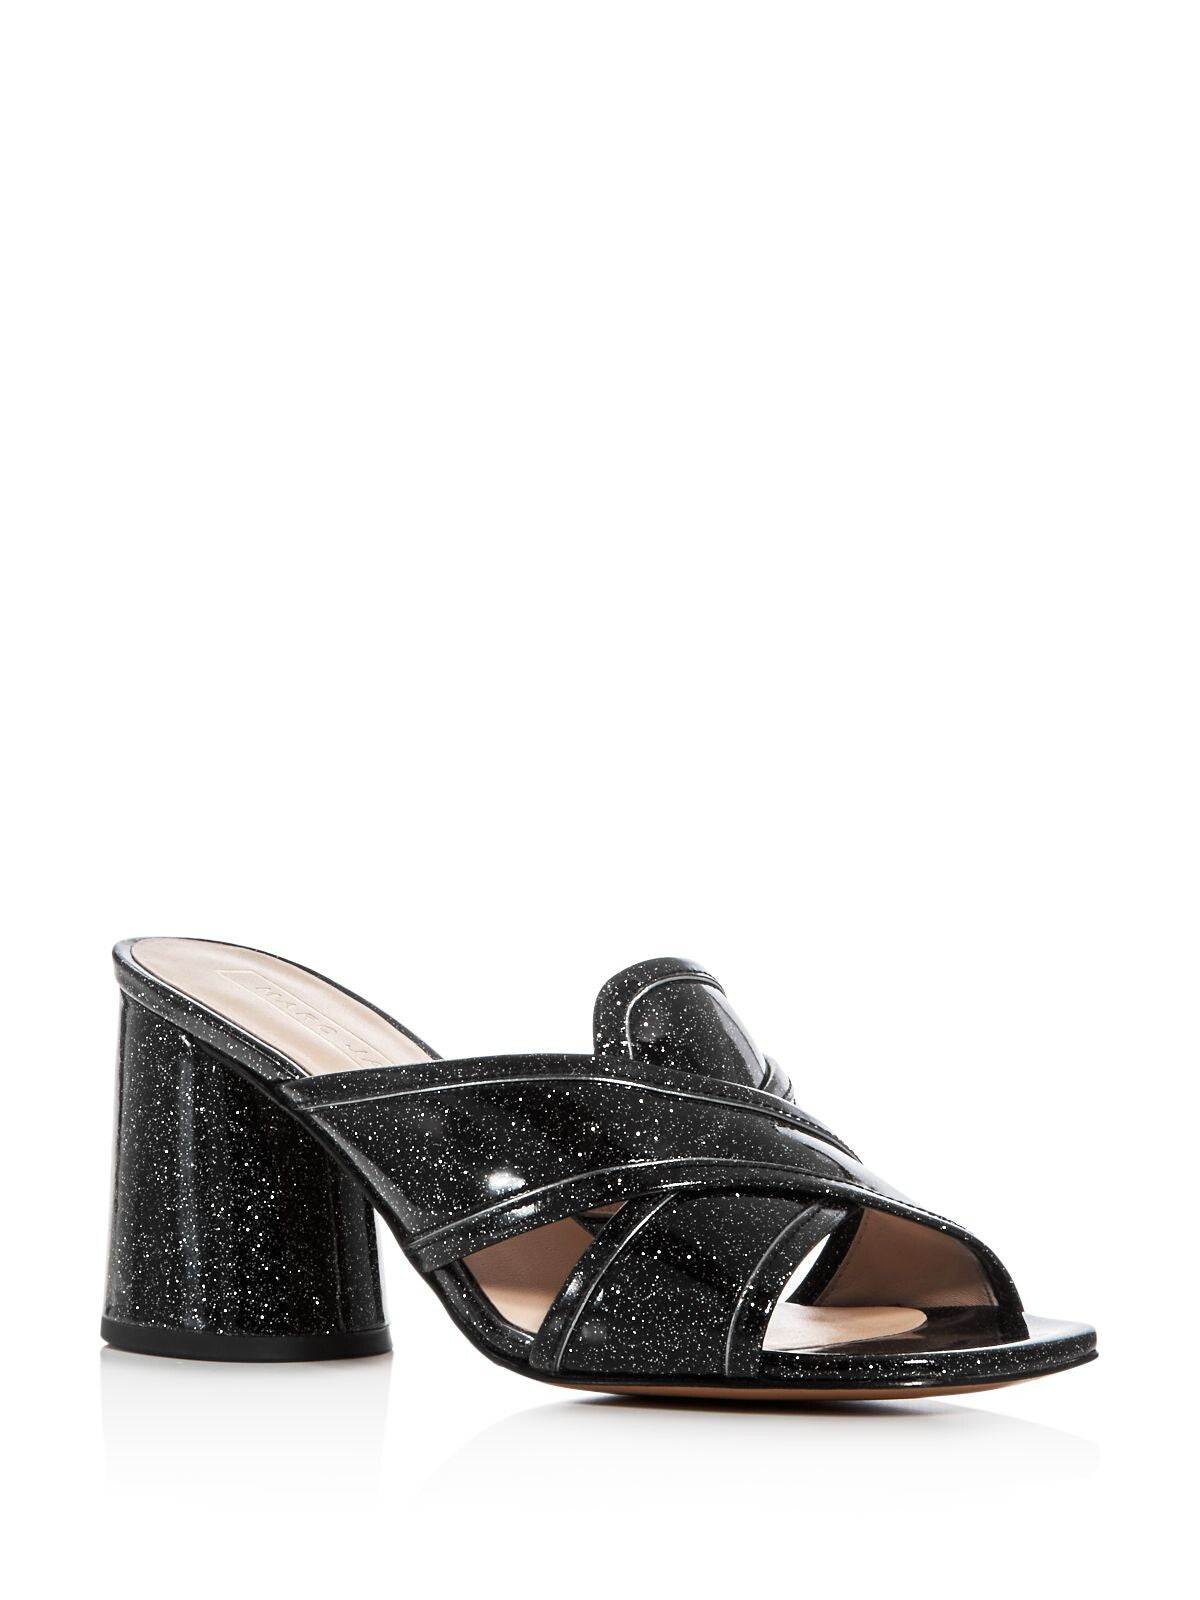 MARC JACOBS Womens Black Cutouts Glitter Aurora Square Toe Slip On Leather Dress Sandals Shoes 36